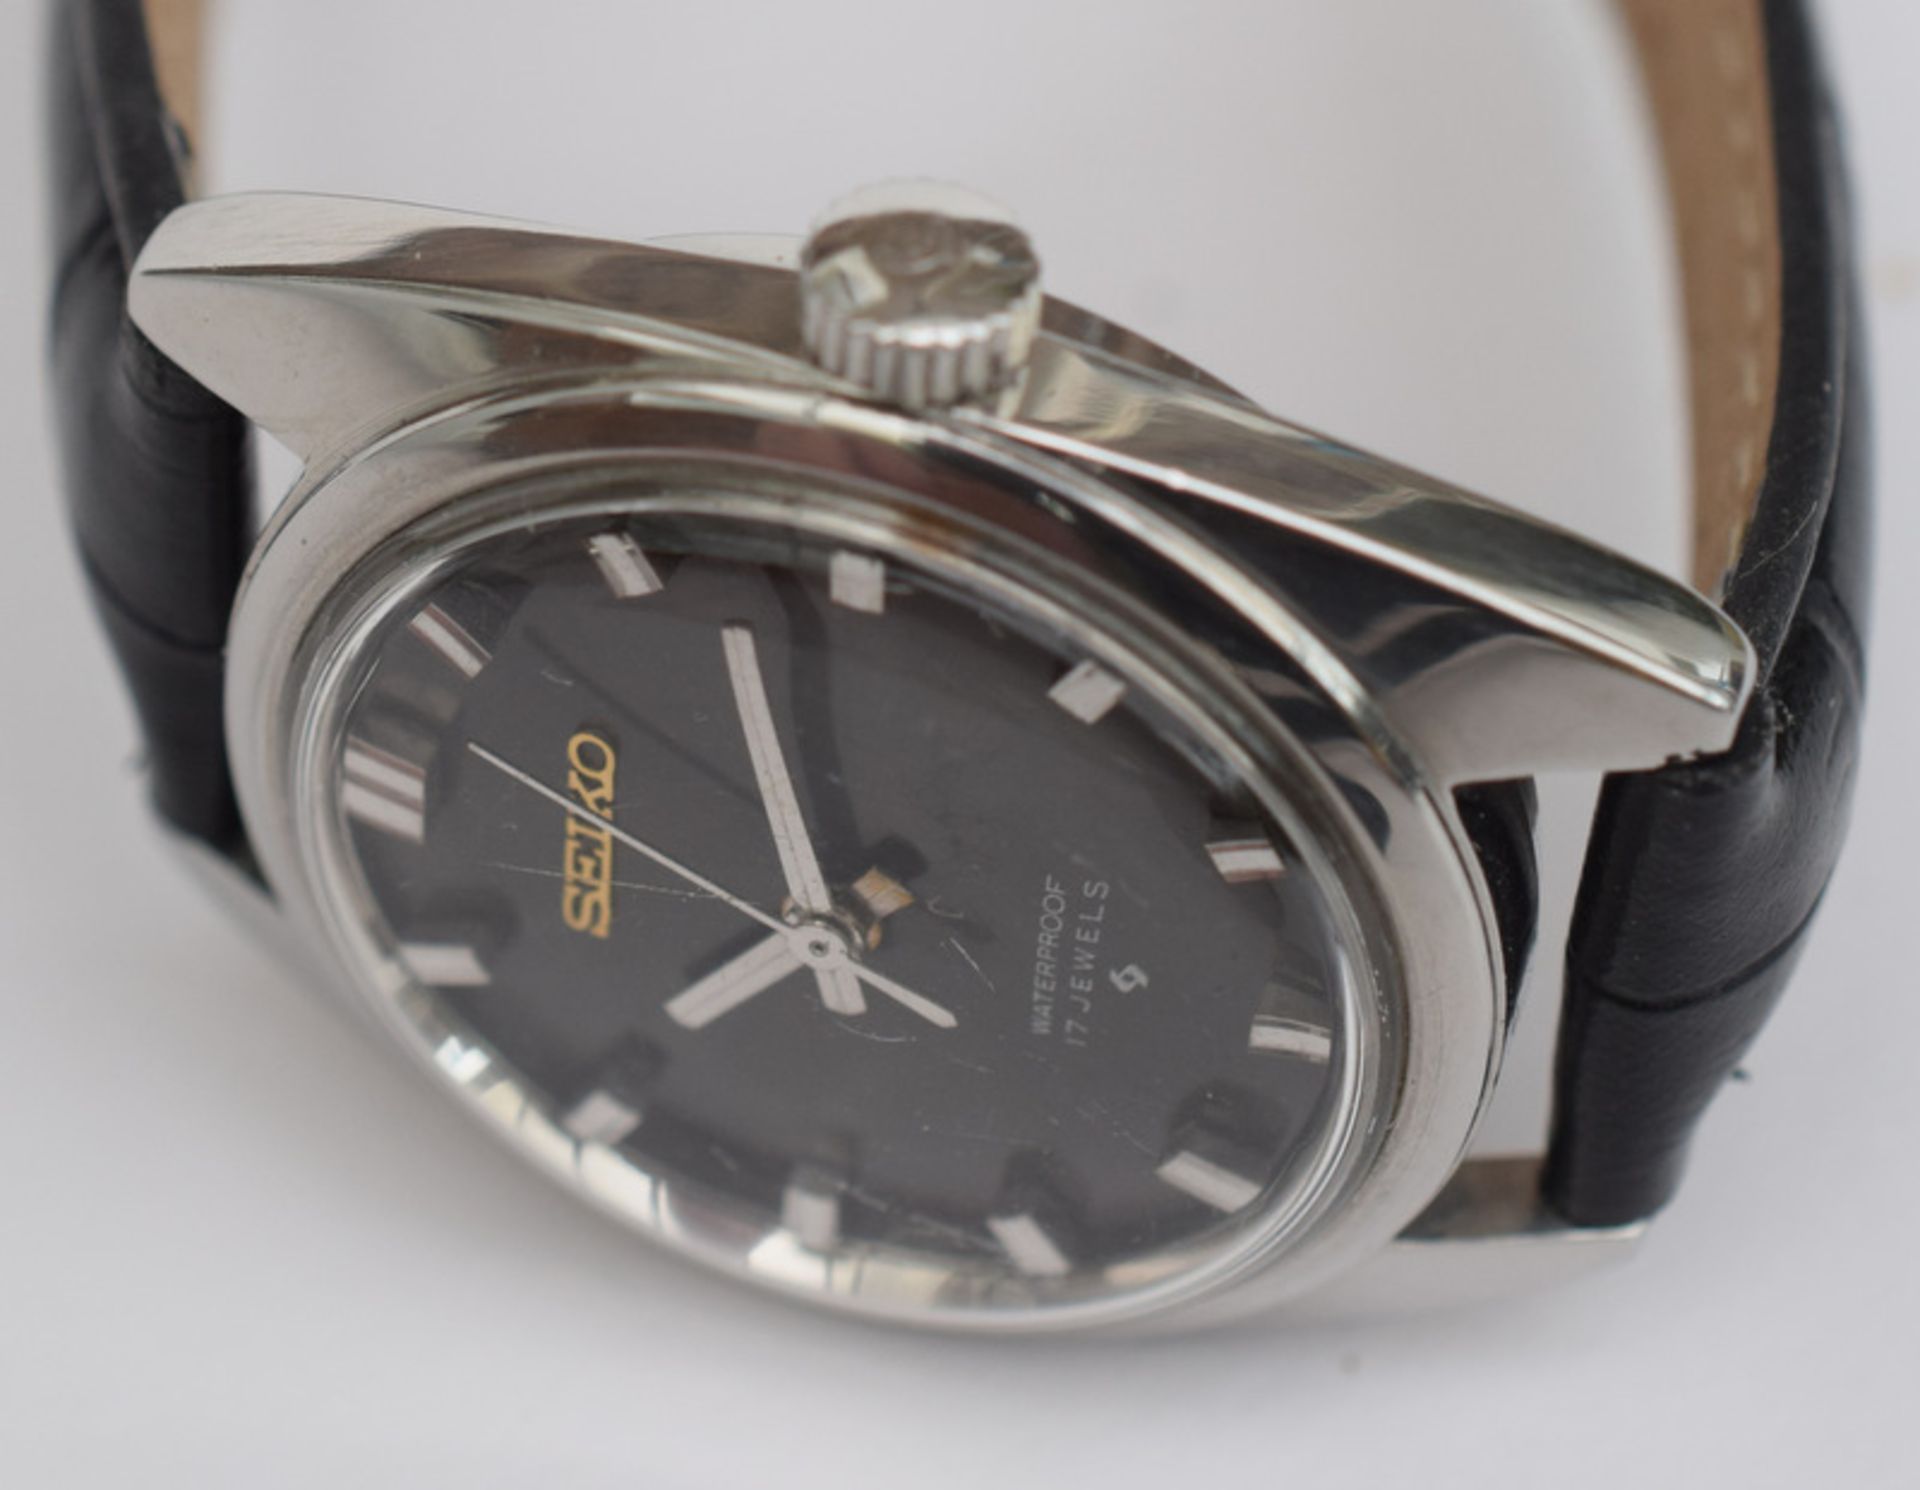 Vintage Seiko 7061 Black Dial Watch - Image 3 of 4